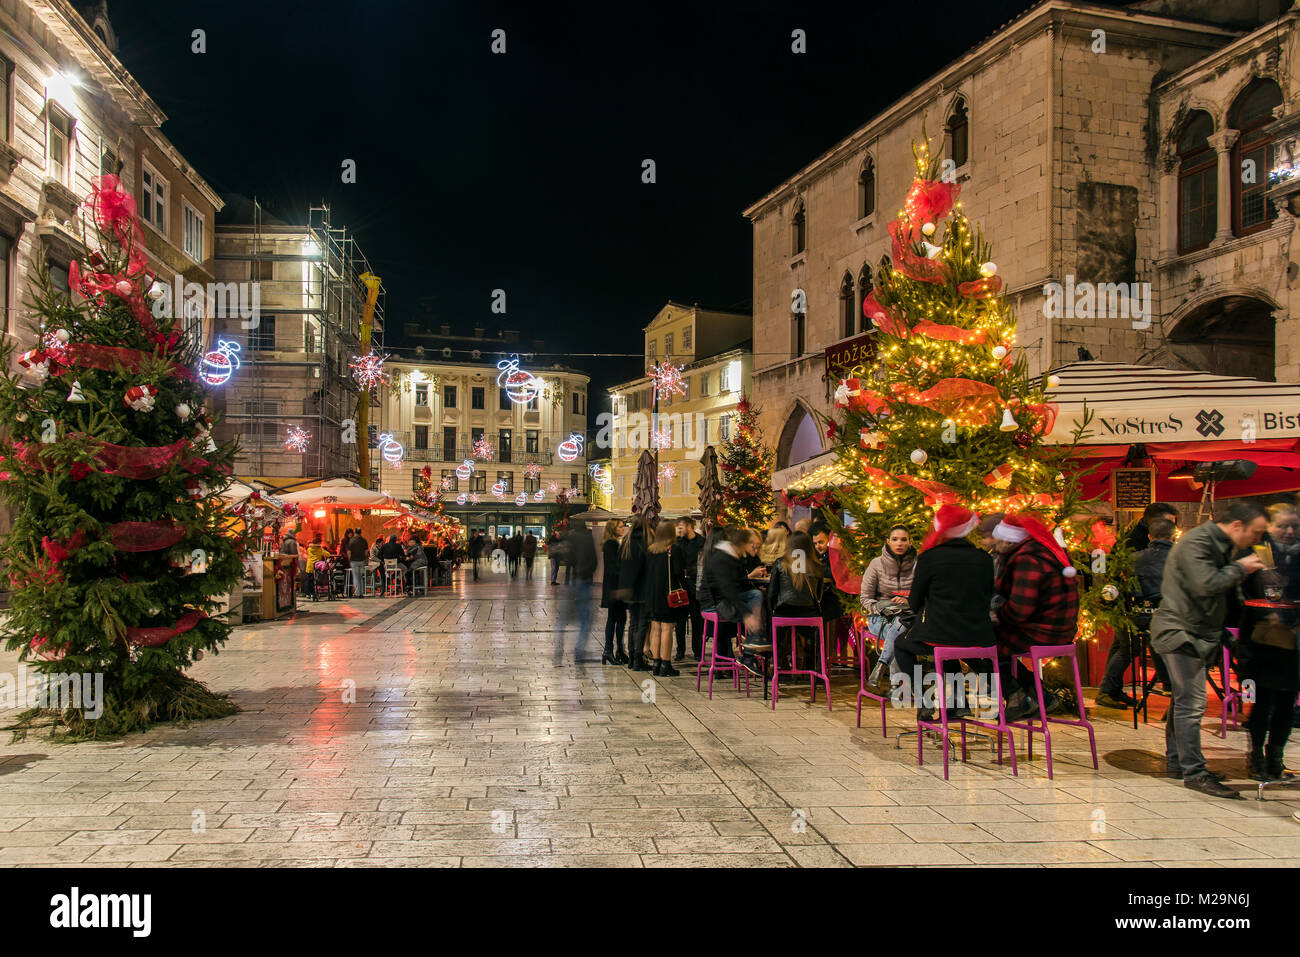 Christmas lights and decorations in Trg Narodni square, Split, Dalmatia, Croatia Stock Photo